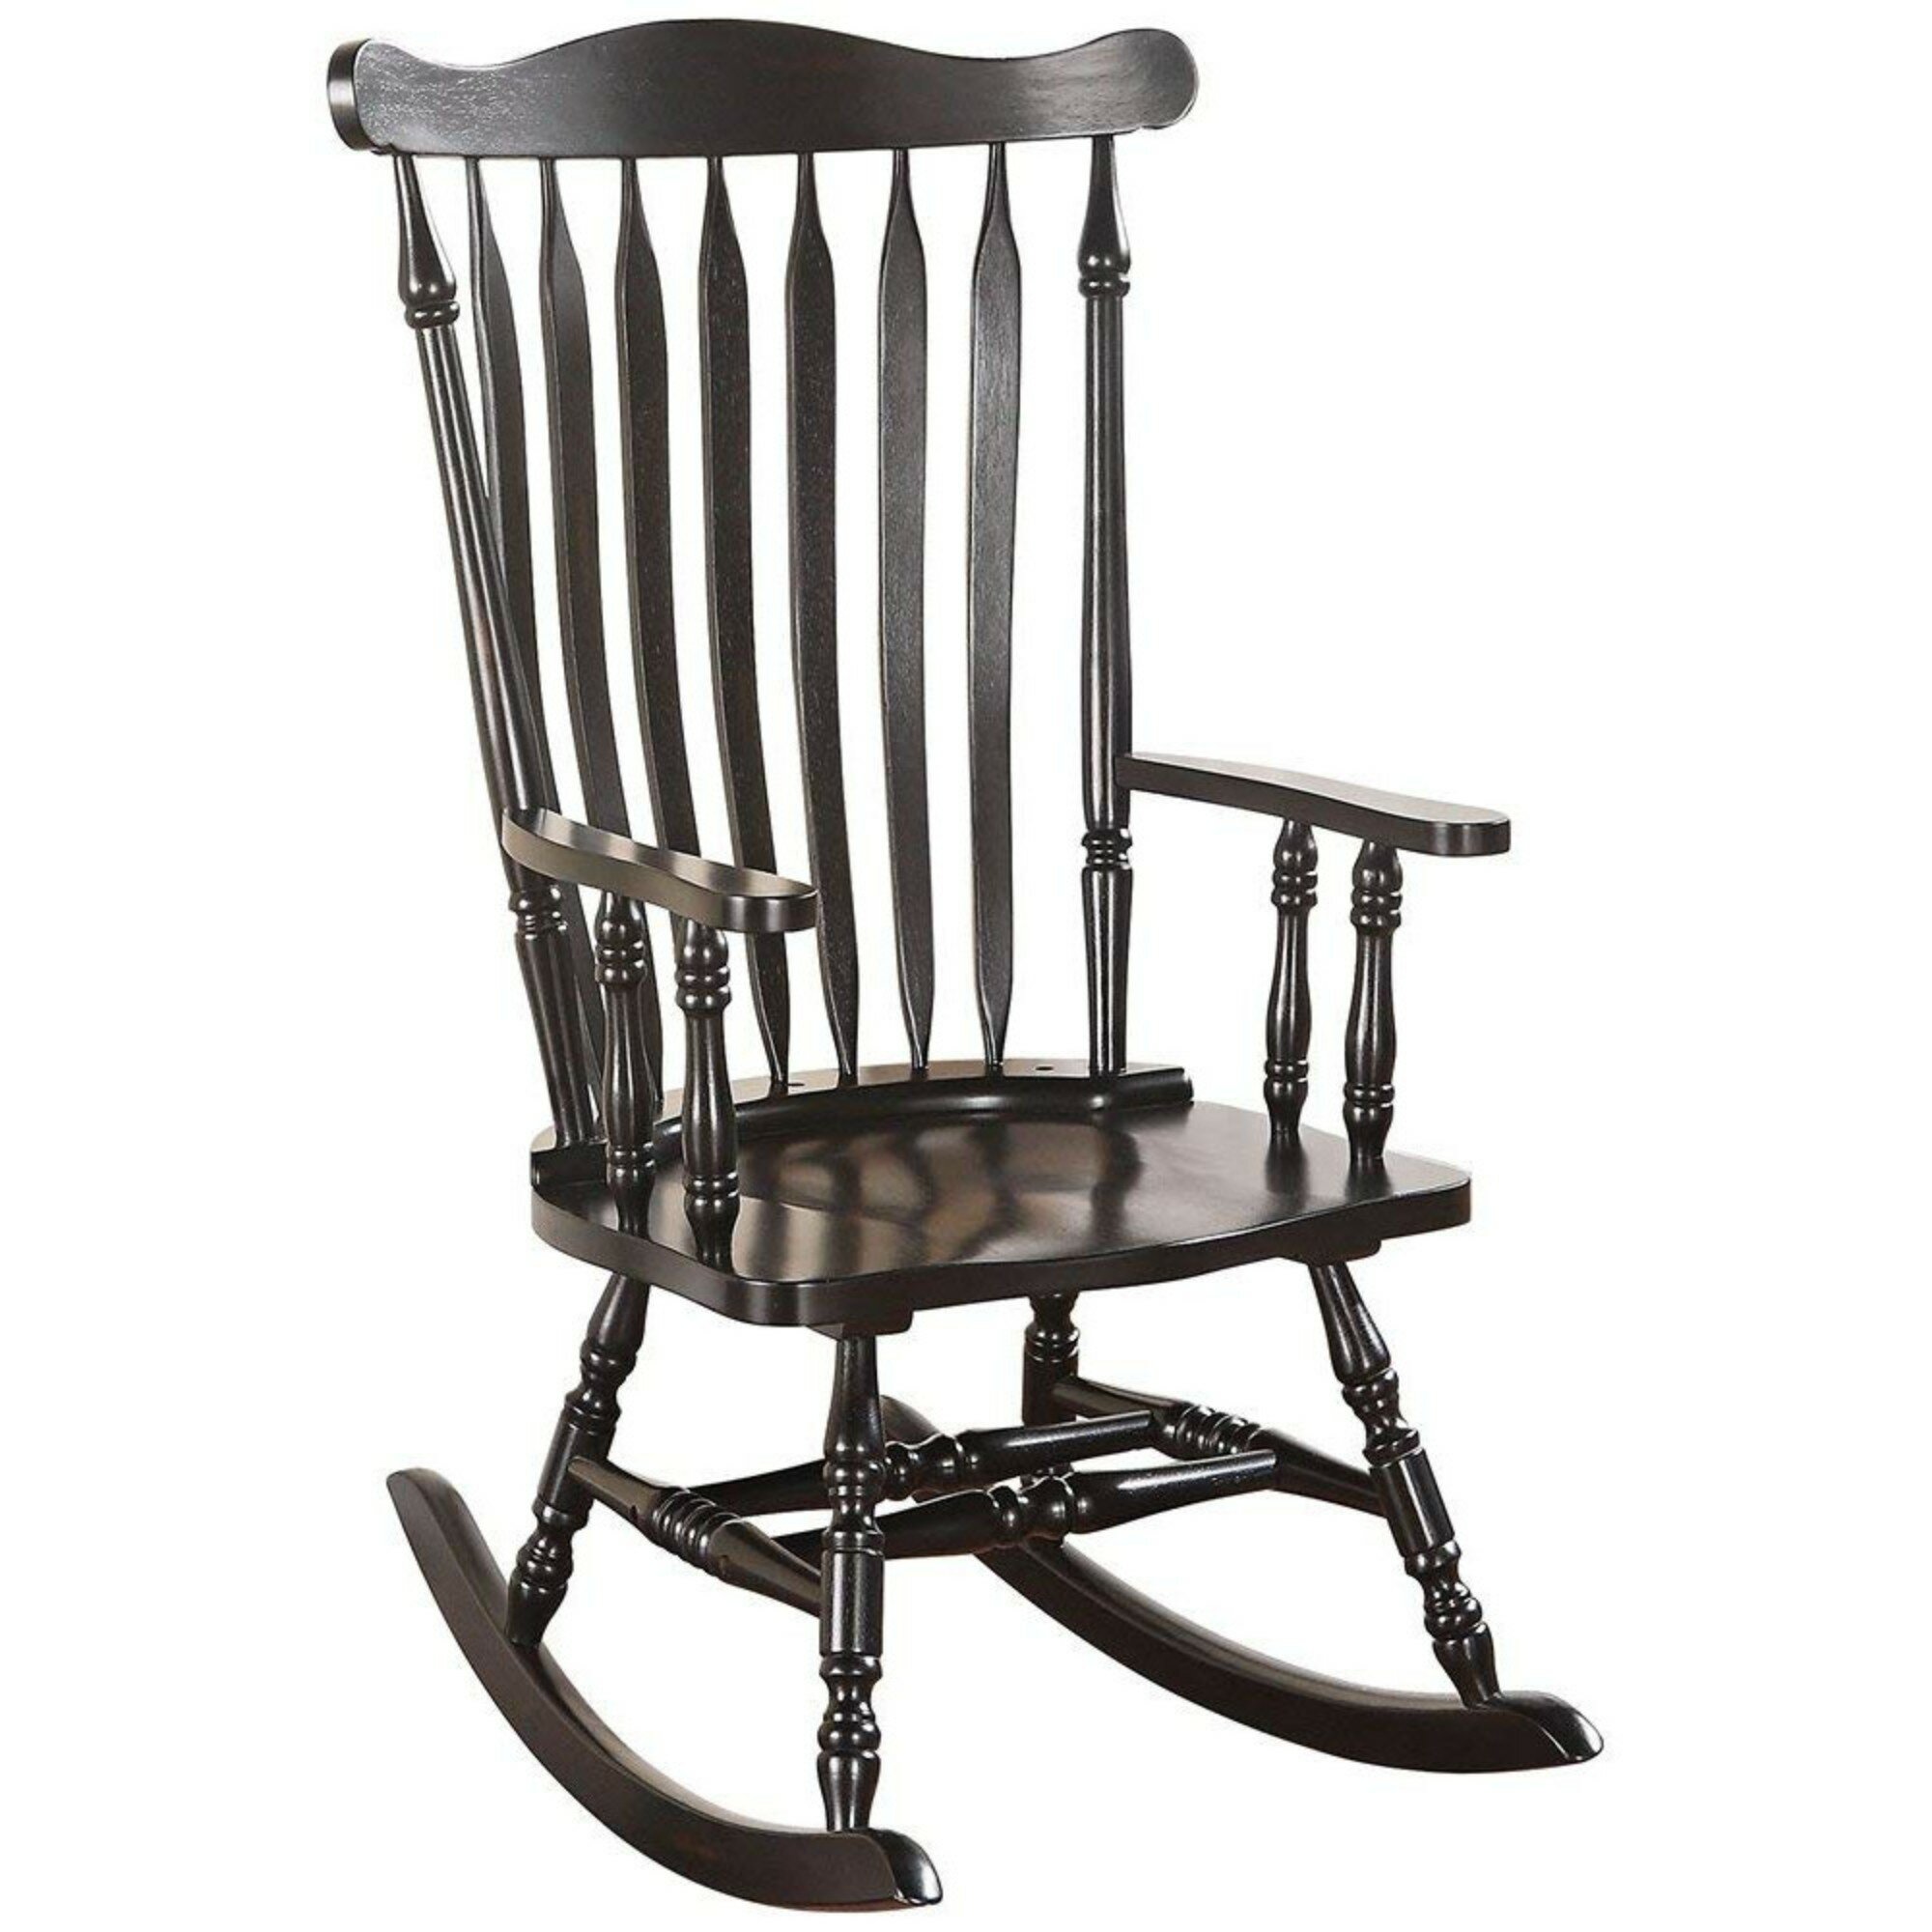 August Grove Levin Wooden Rocking Chair 191833657537 Ebay